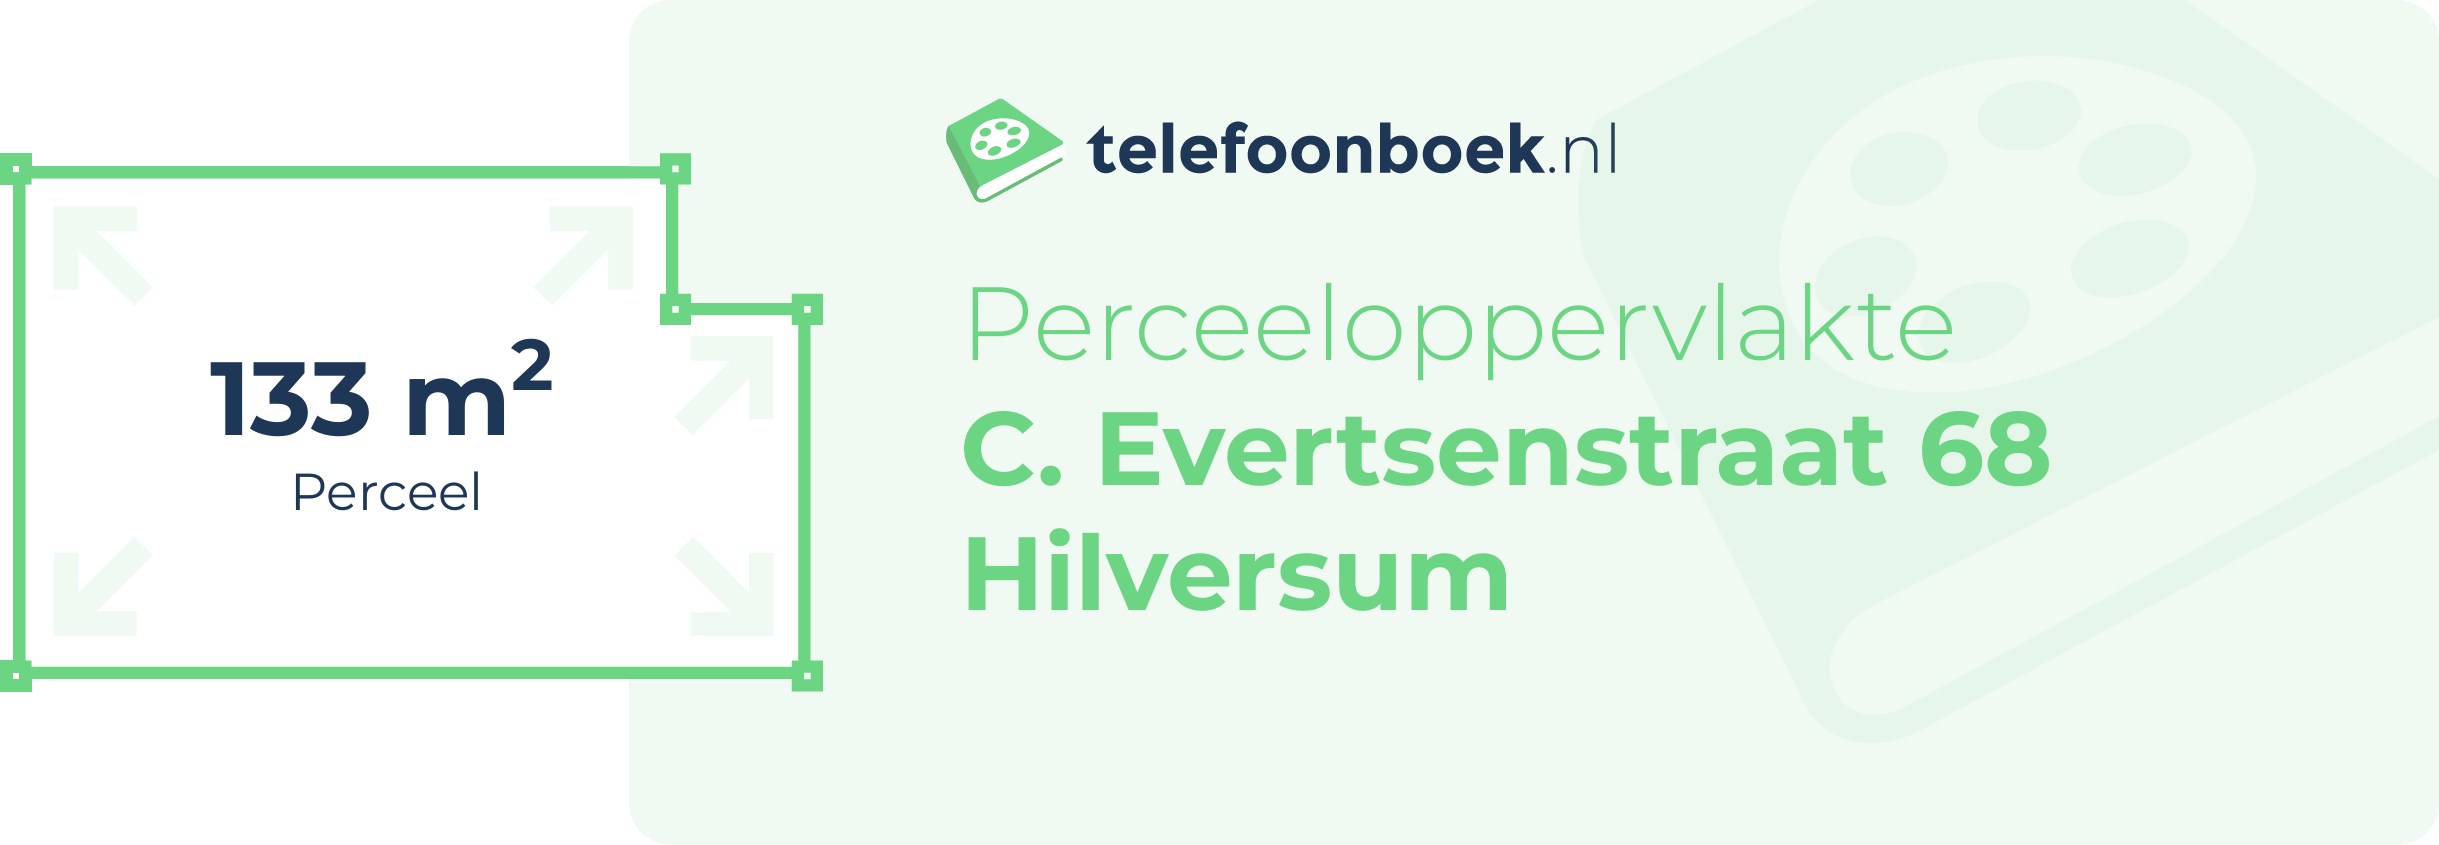 Perceeloppervlakte C. Evertsenstraat 68 Hilversum